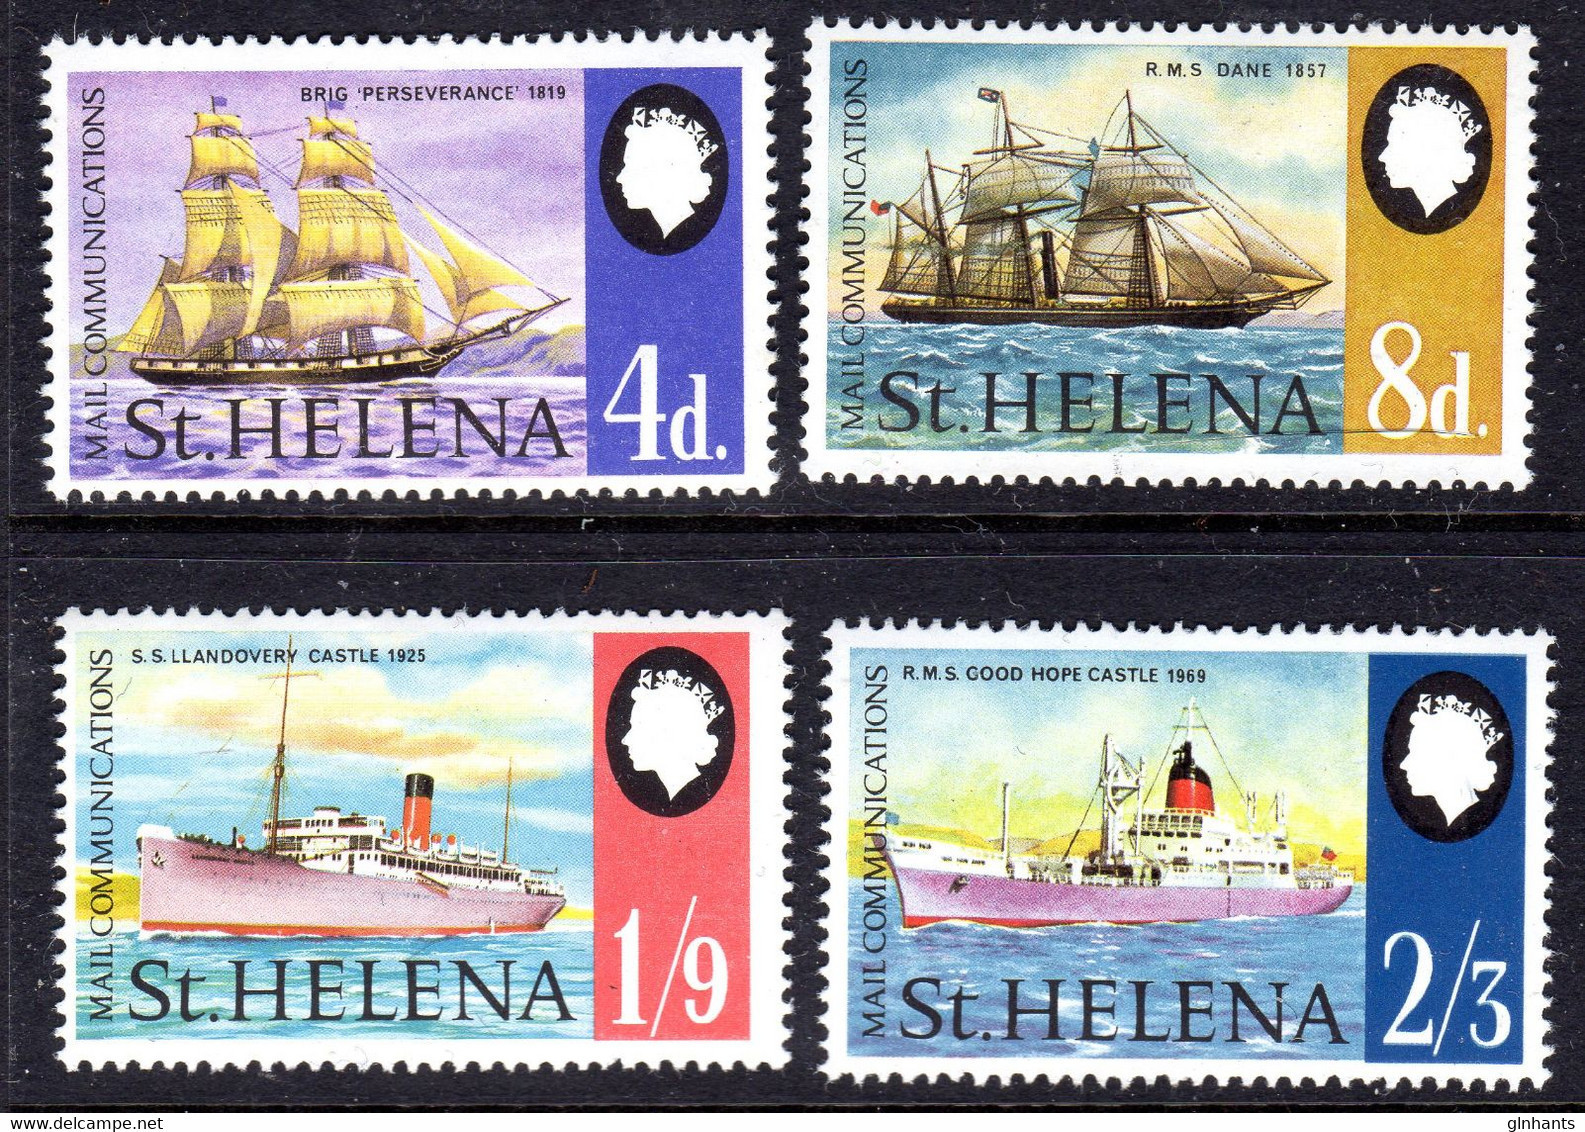 ST HELENA - 1969 MAIL COMMUNICATION SHIPS SET (4V) FINE MNH ** SG 241-244 - St. Helena